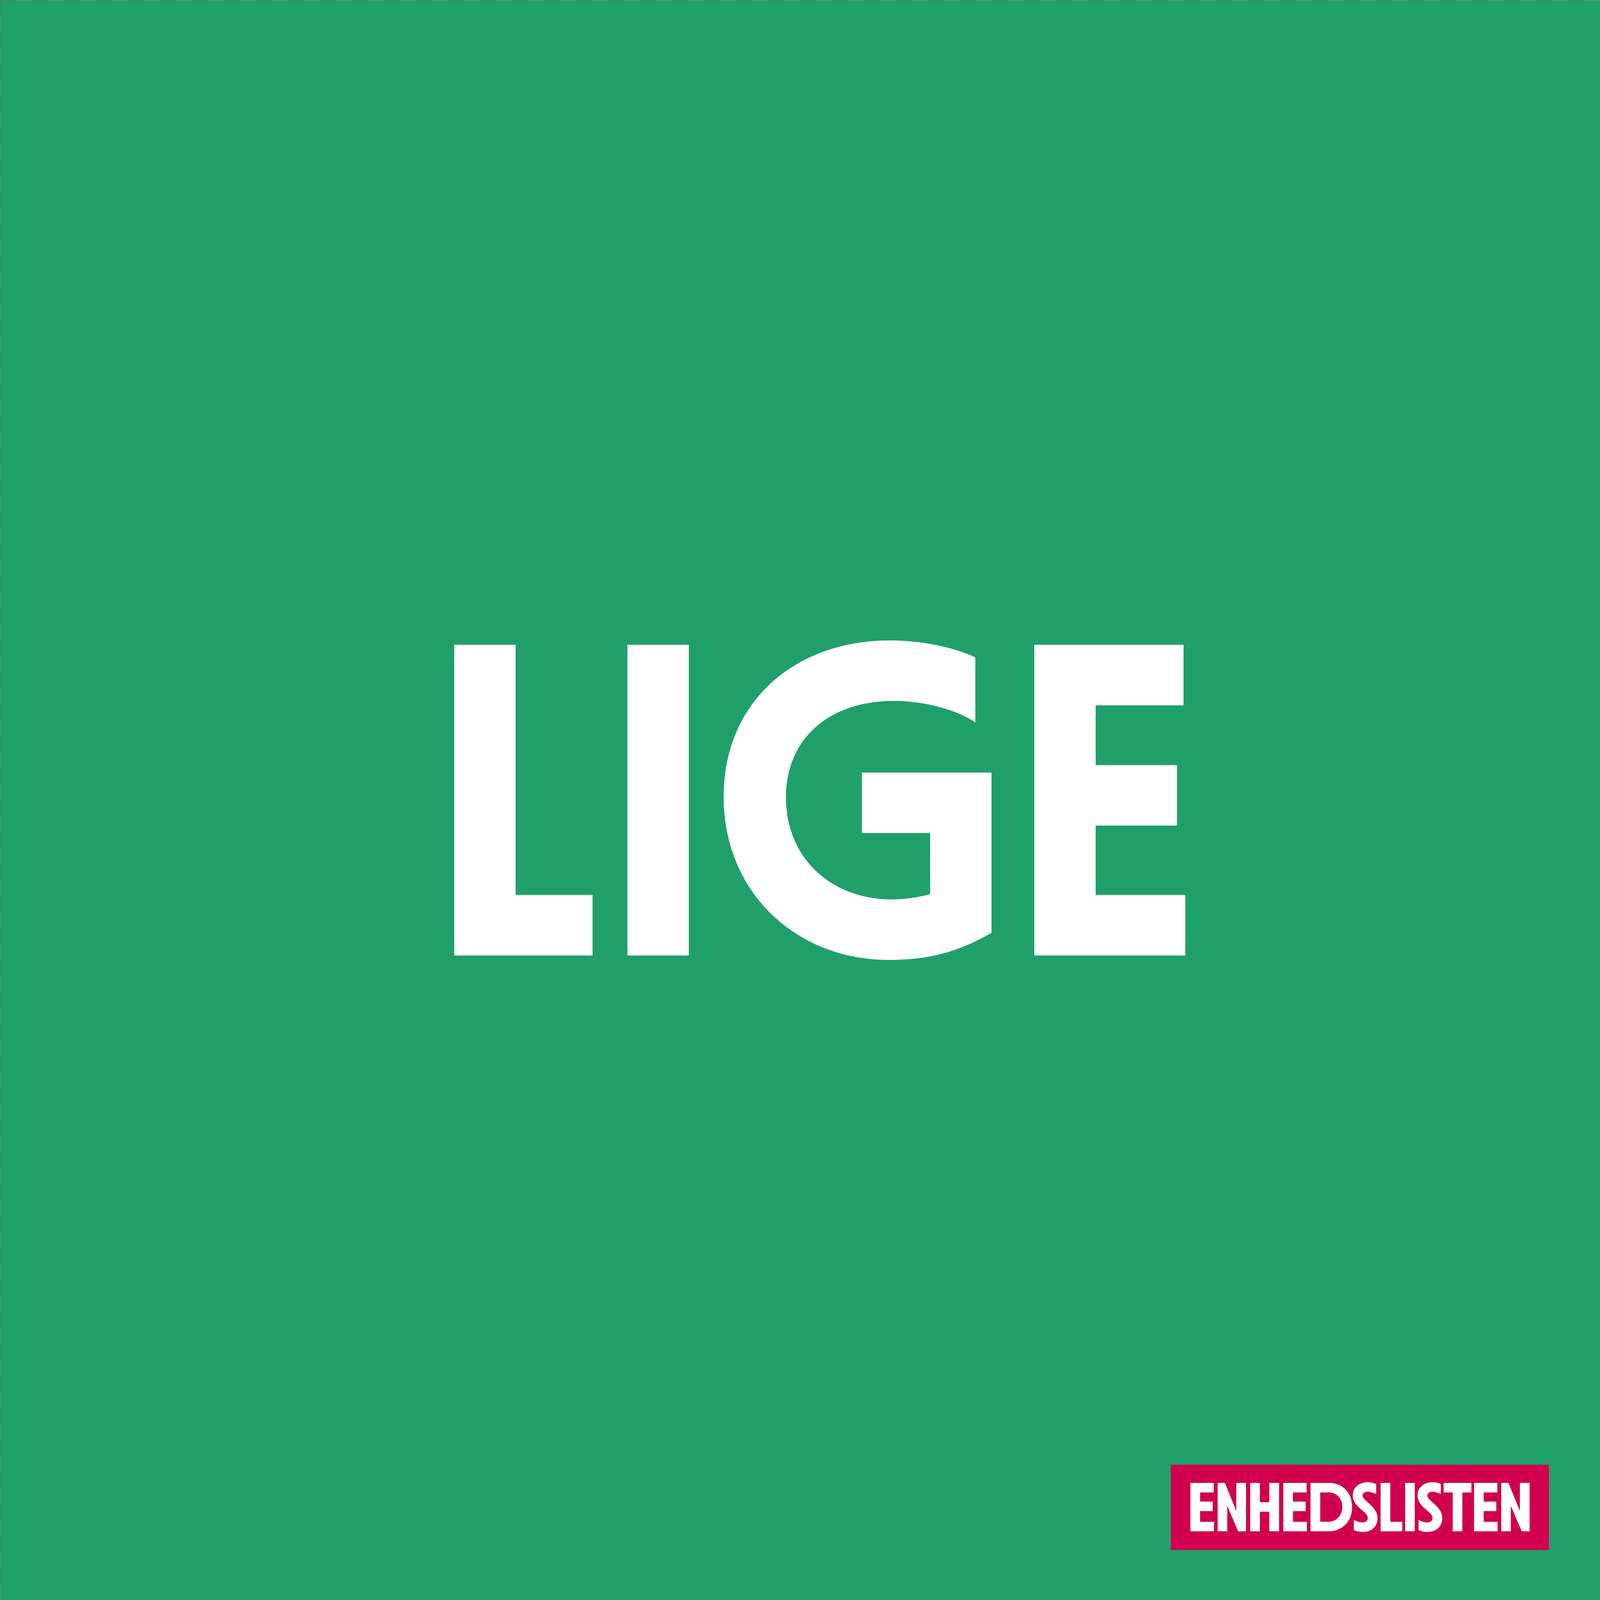 2. LIGE slogan